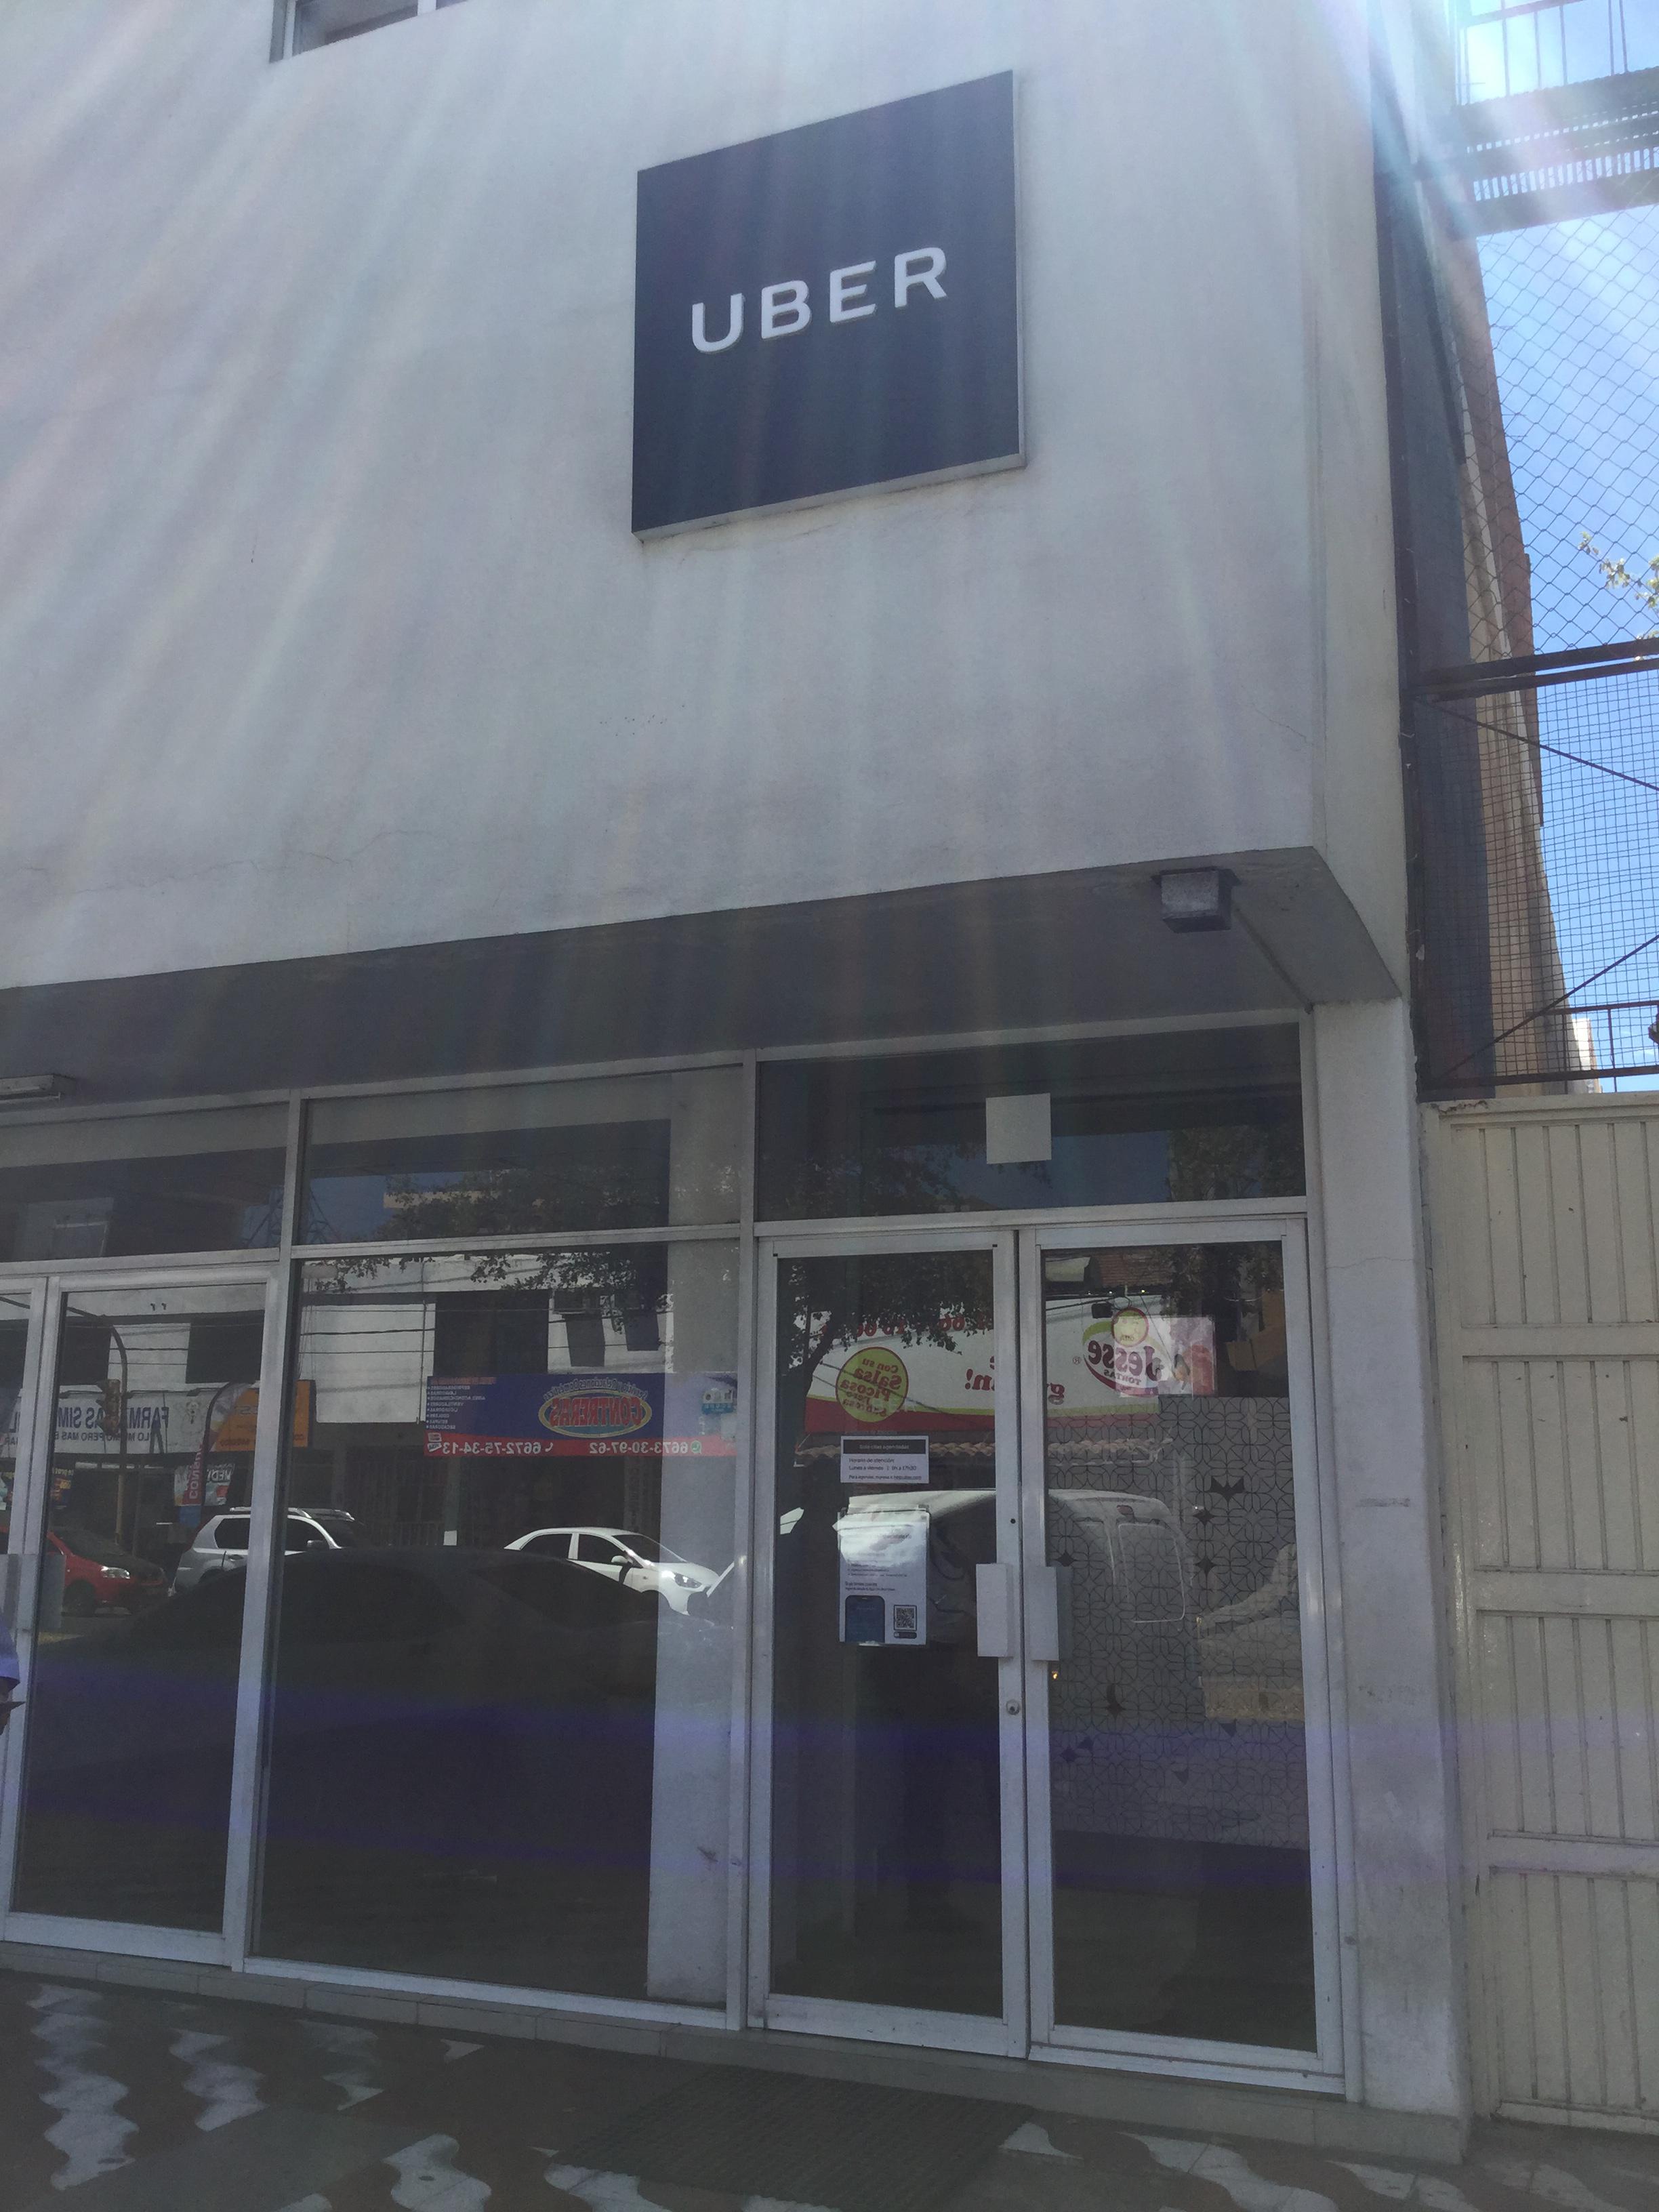 Images Atención Presencial Uber - Culiacan